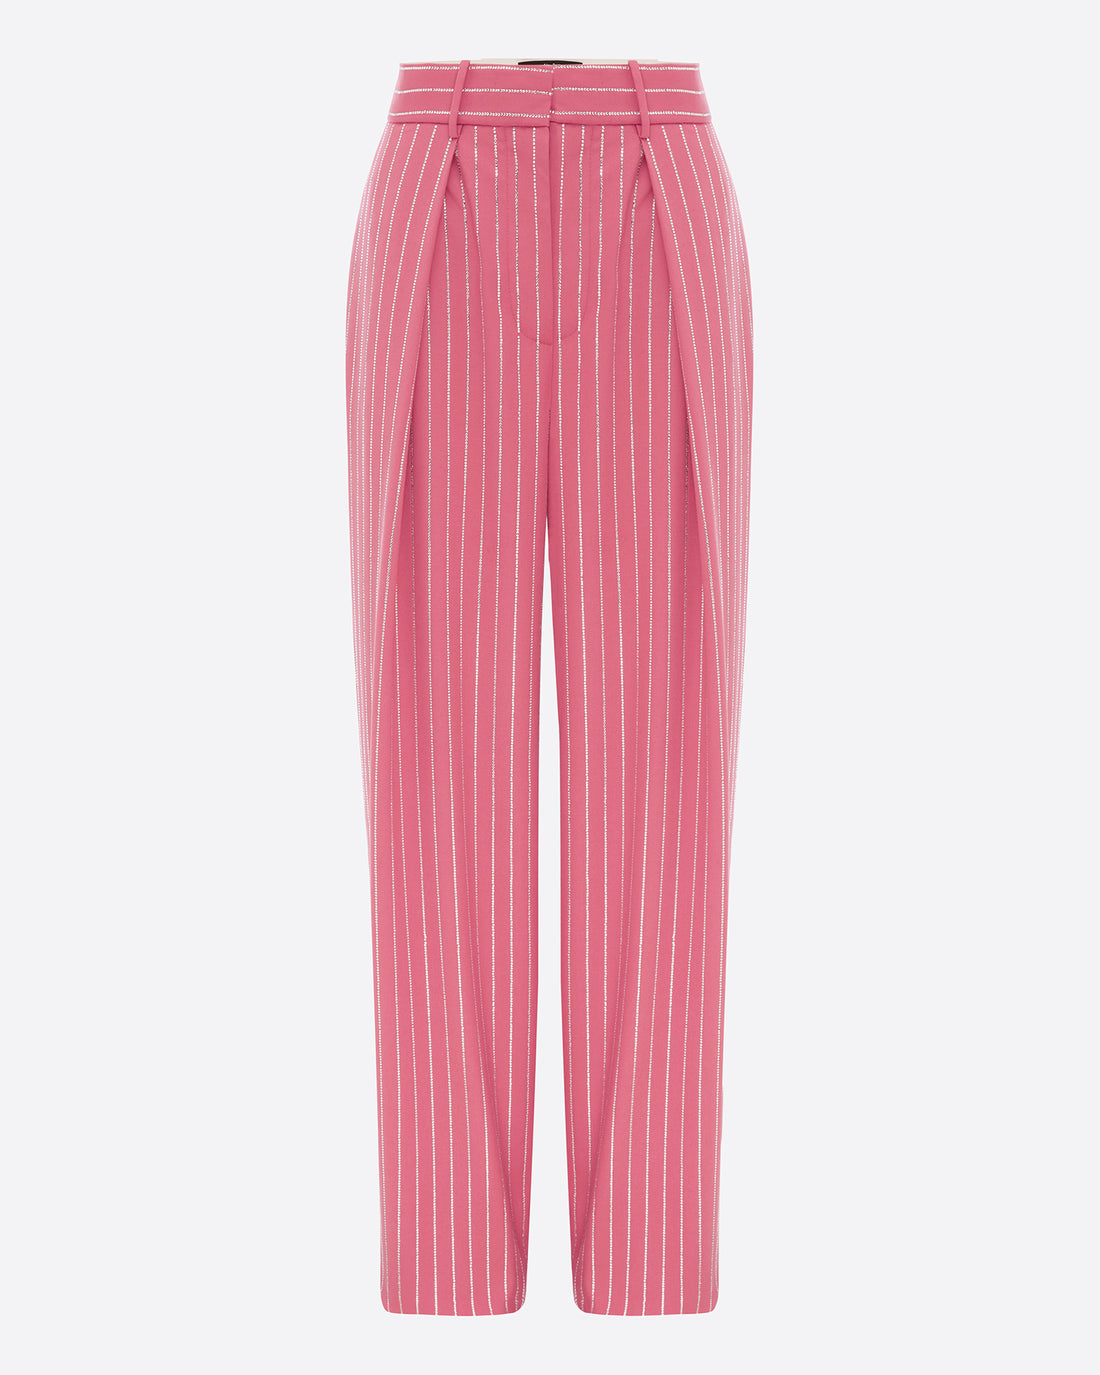 Low Rise Pleat Trouser in Crystal Pinstripe